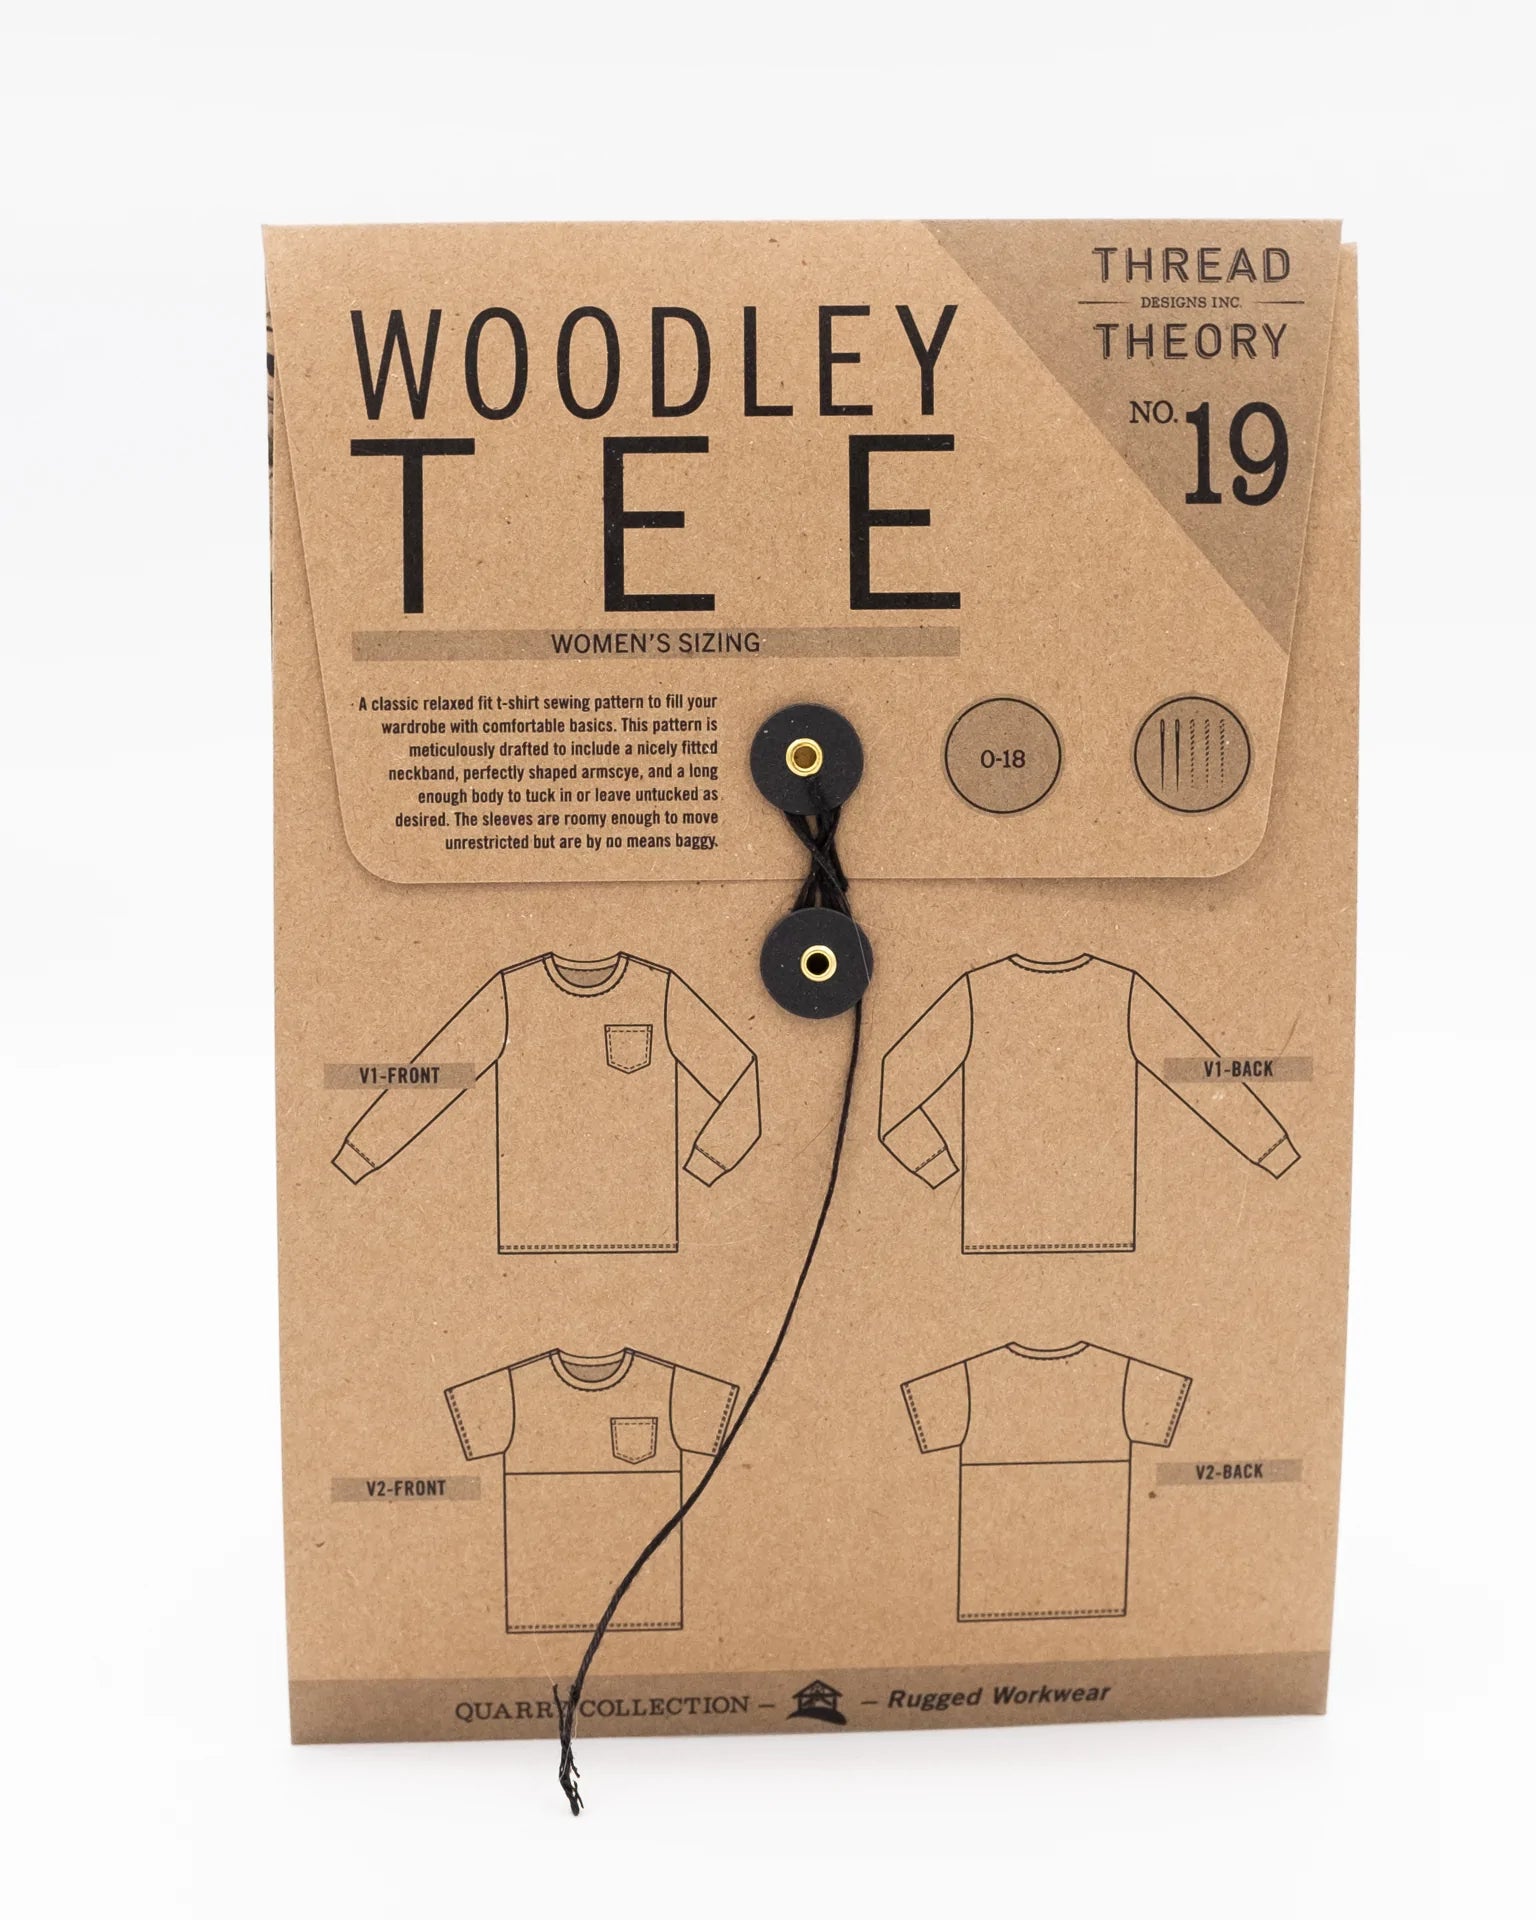 Thread Theory No 19 Woodley Tee (Women's Sizing) – Lamazi Fabrics